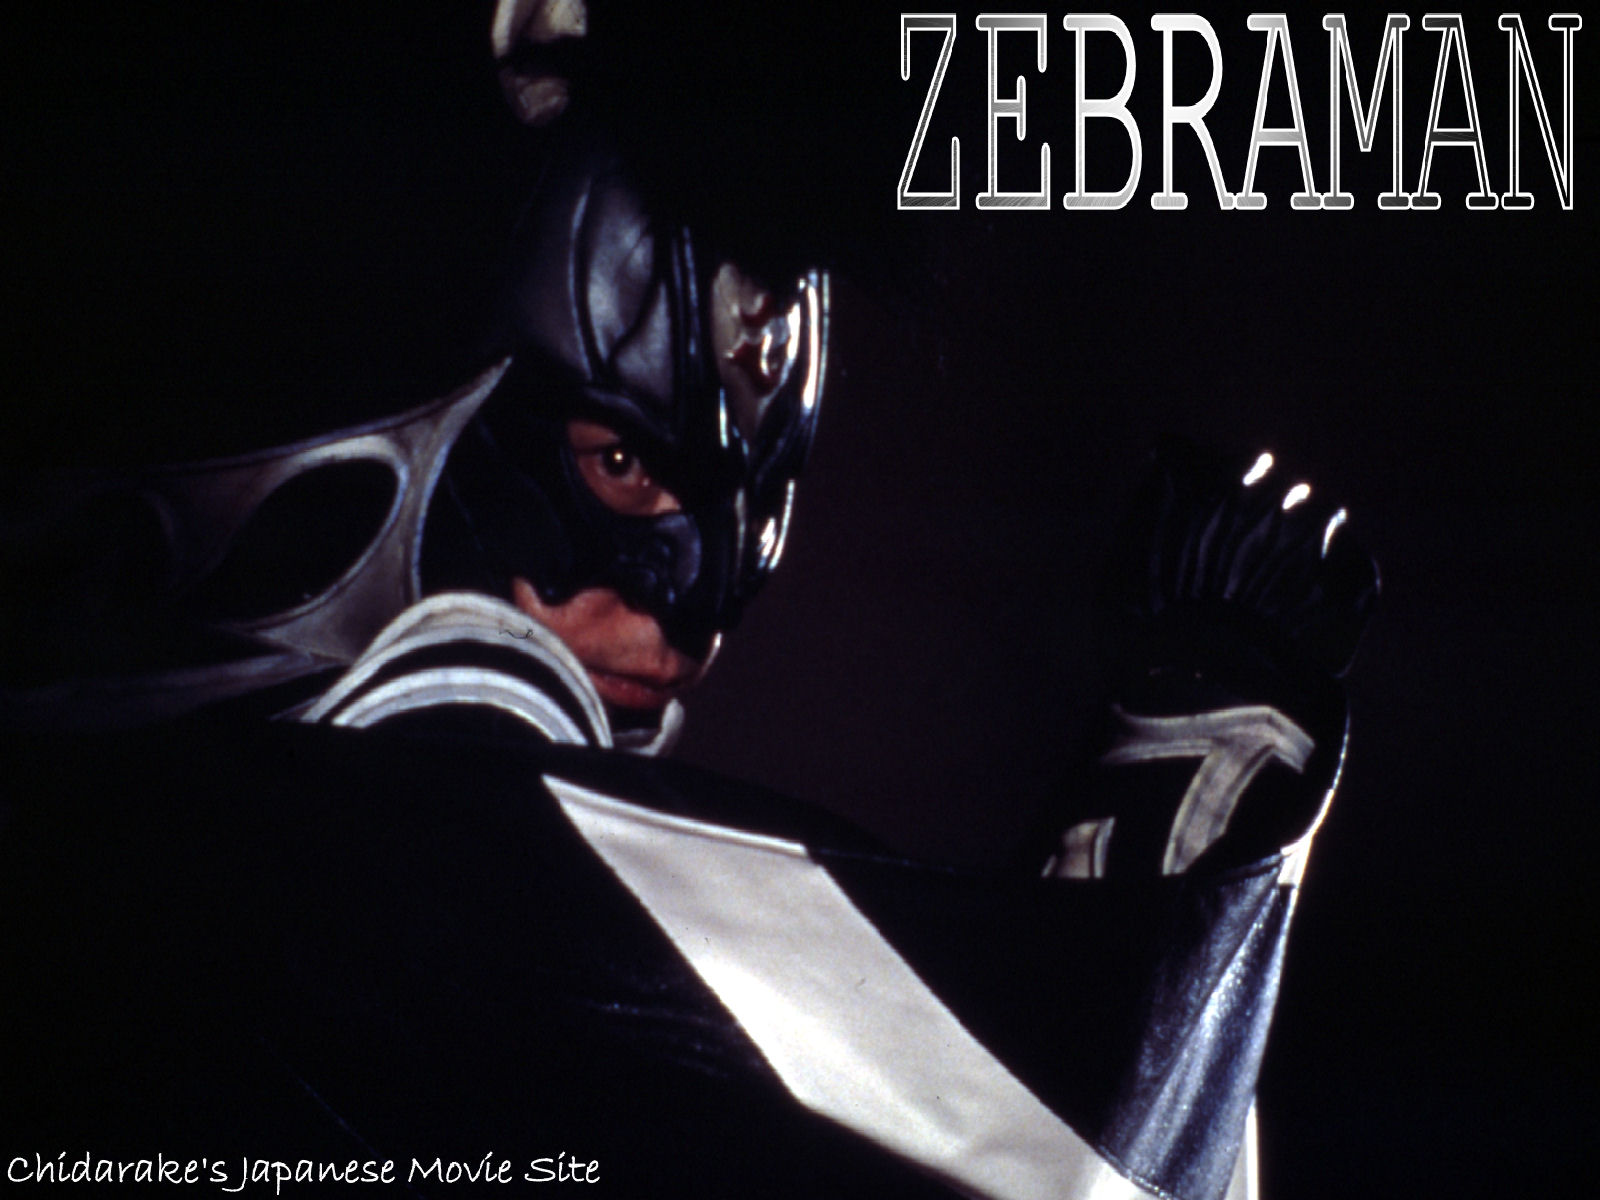 The Zebra Man